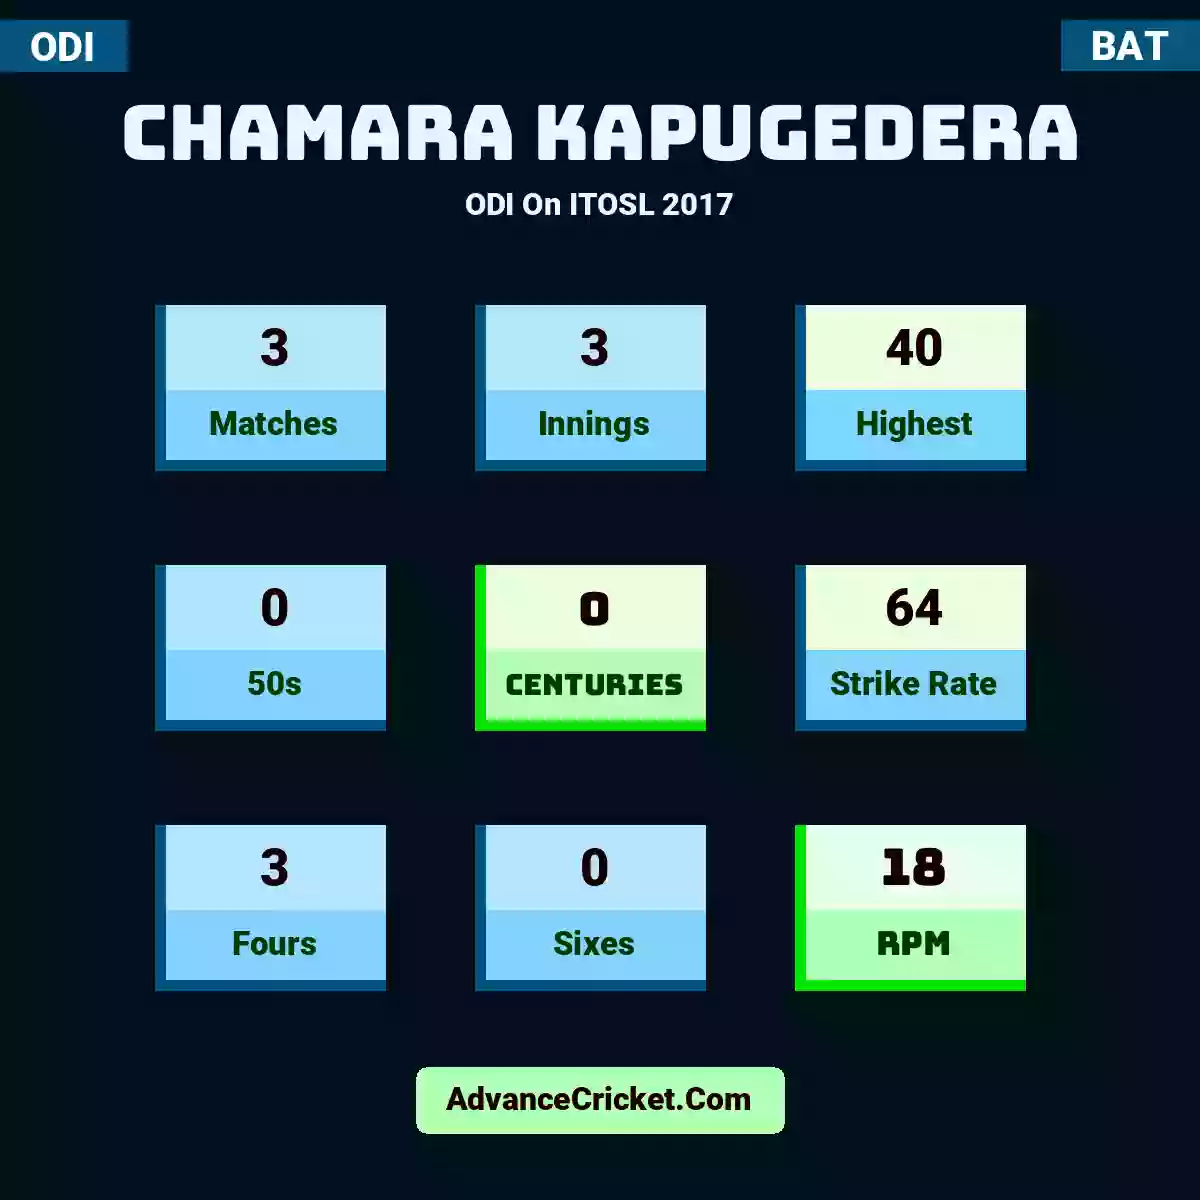 Chamara Kapugedera ODI  On ITOSL 2017, Chamara Kapugedera played 3 matches, scored 40 runs as highest, 0 half-centuries, and 0 centuries, with a strike rate of 64. C.Kapugedera hit 3 fours and 0 sixes, with an RPM of 18.